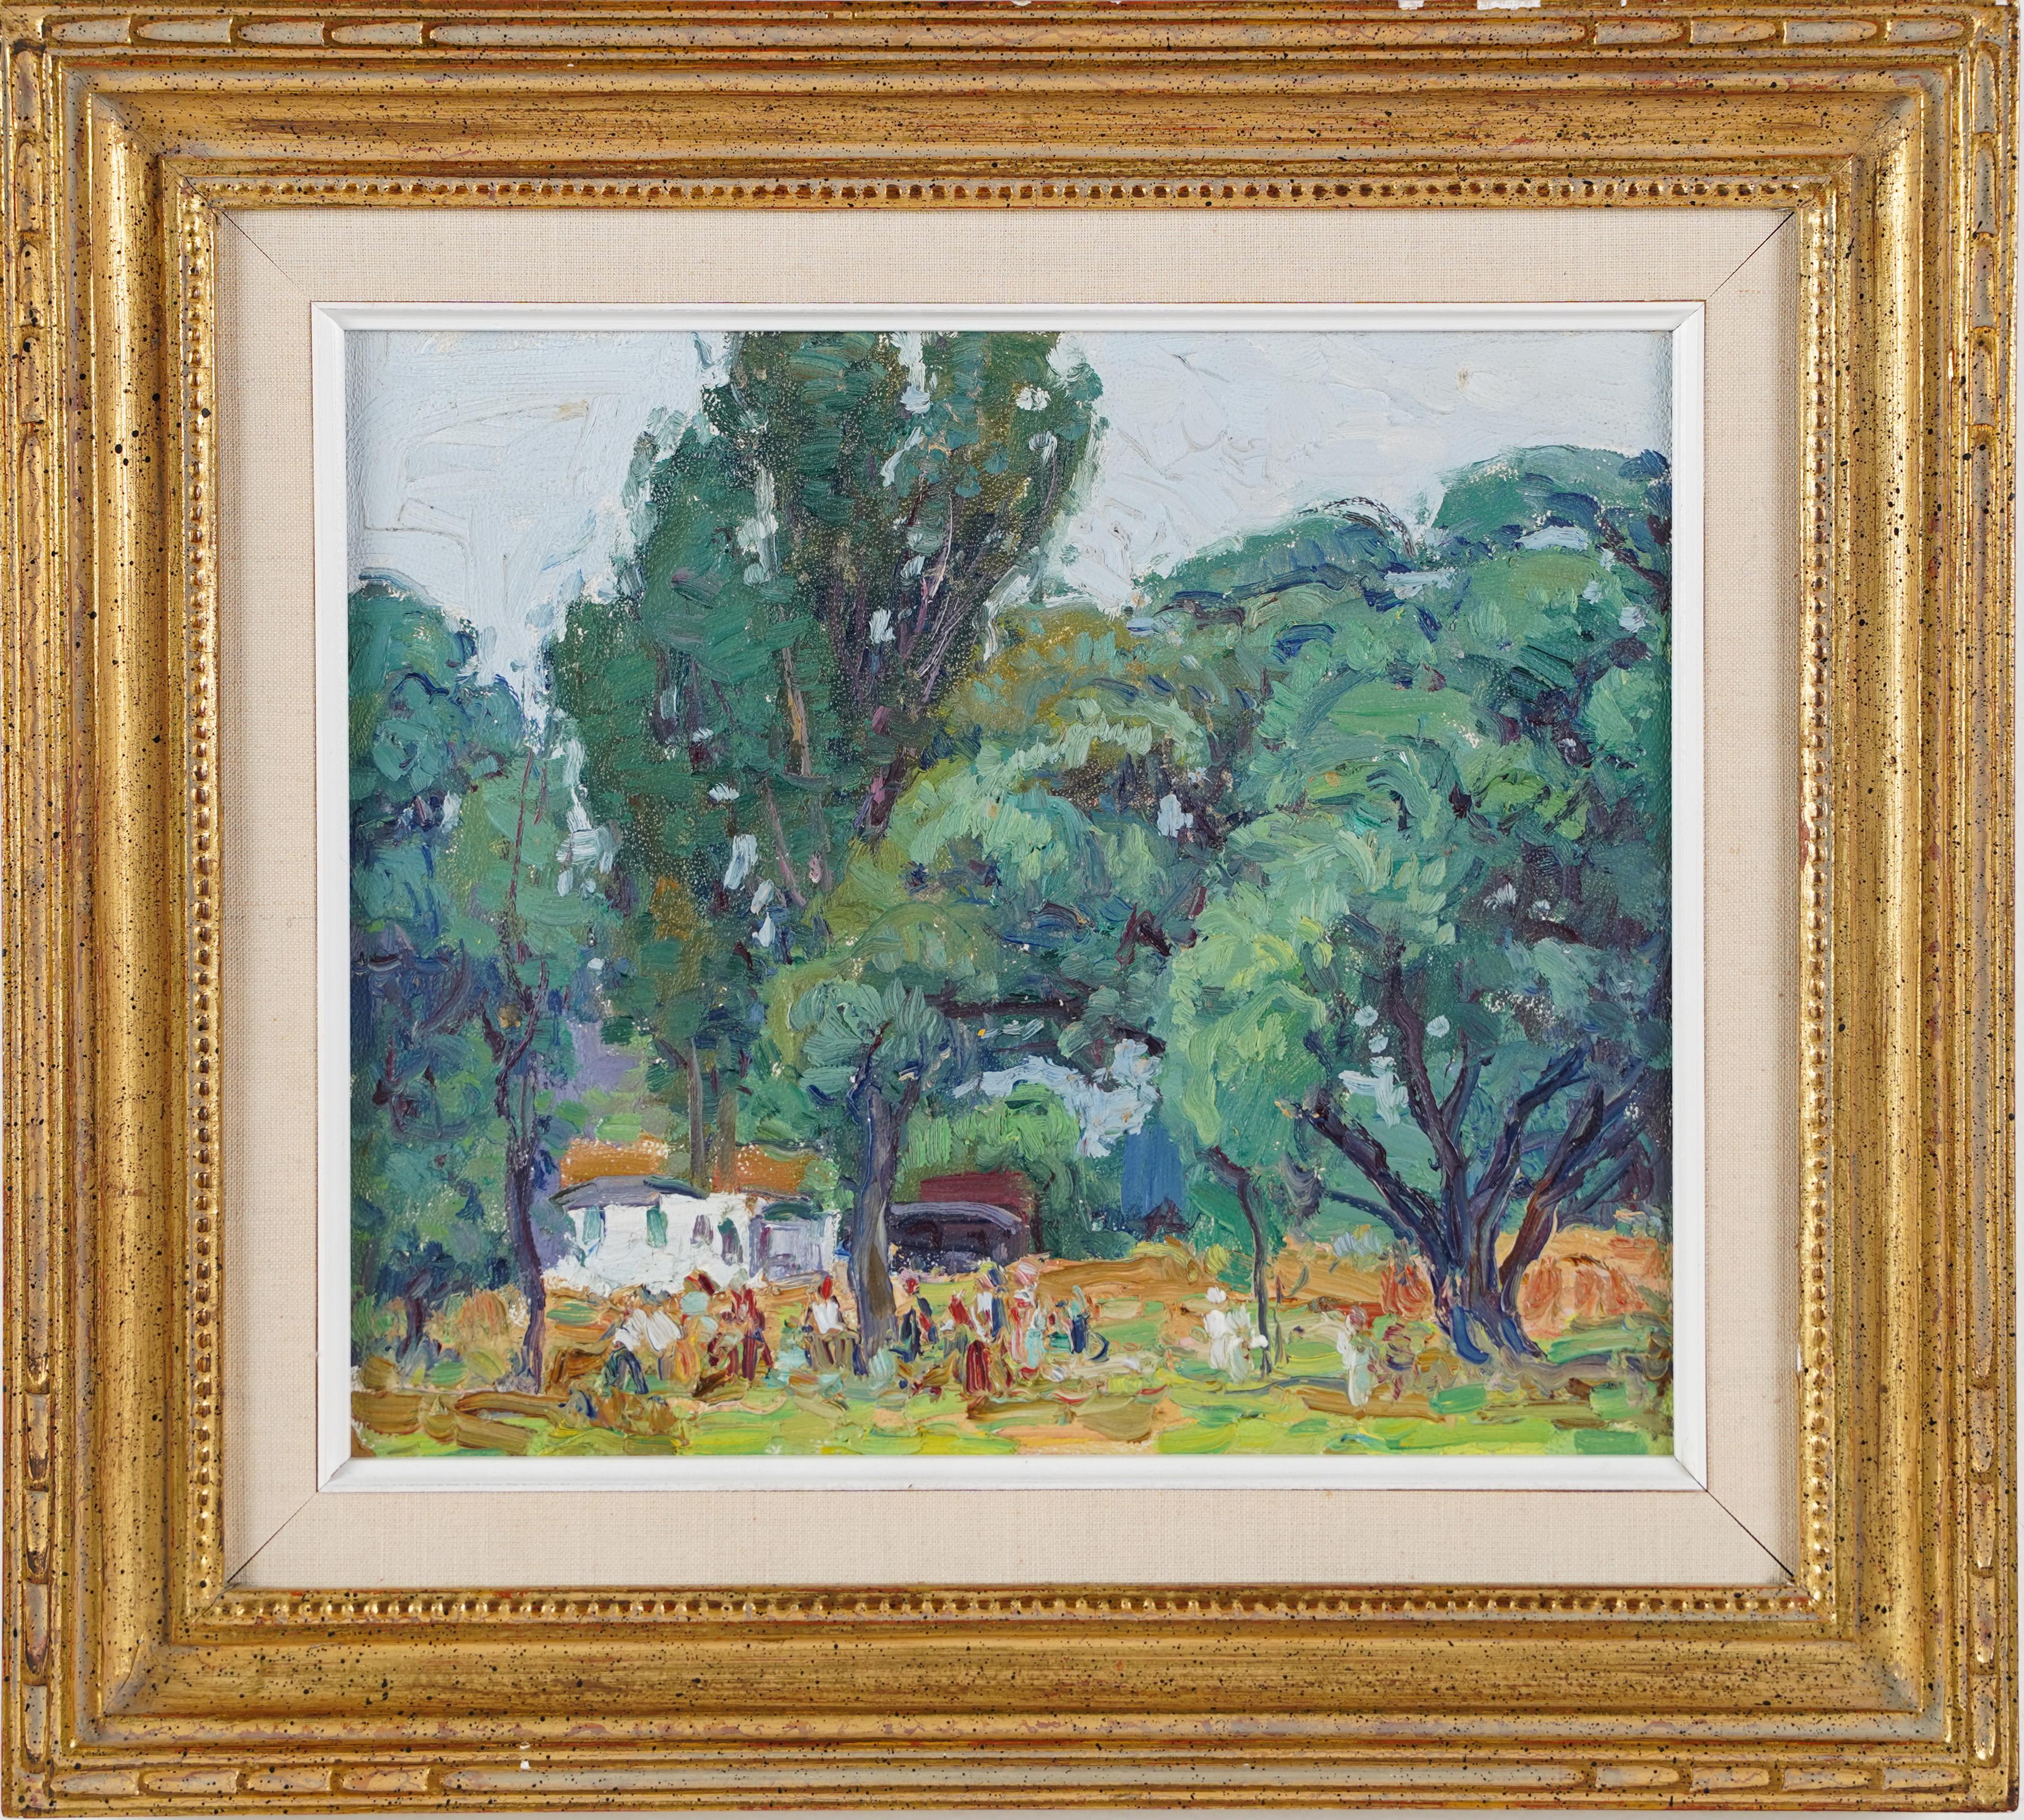 Antique American impressionist landscape oil painting.  Oil on board.  Framed.  Image size, 10L x 8.5H.